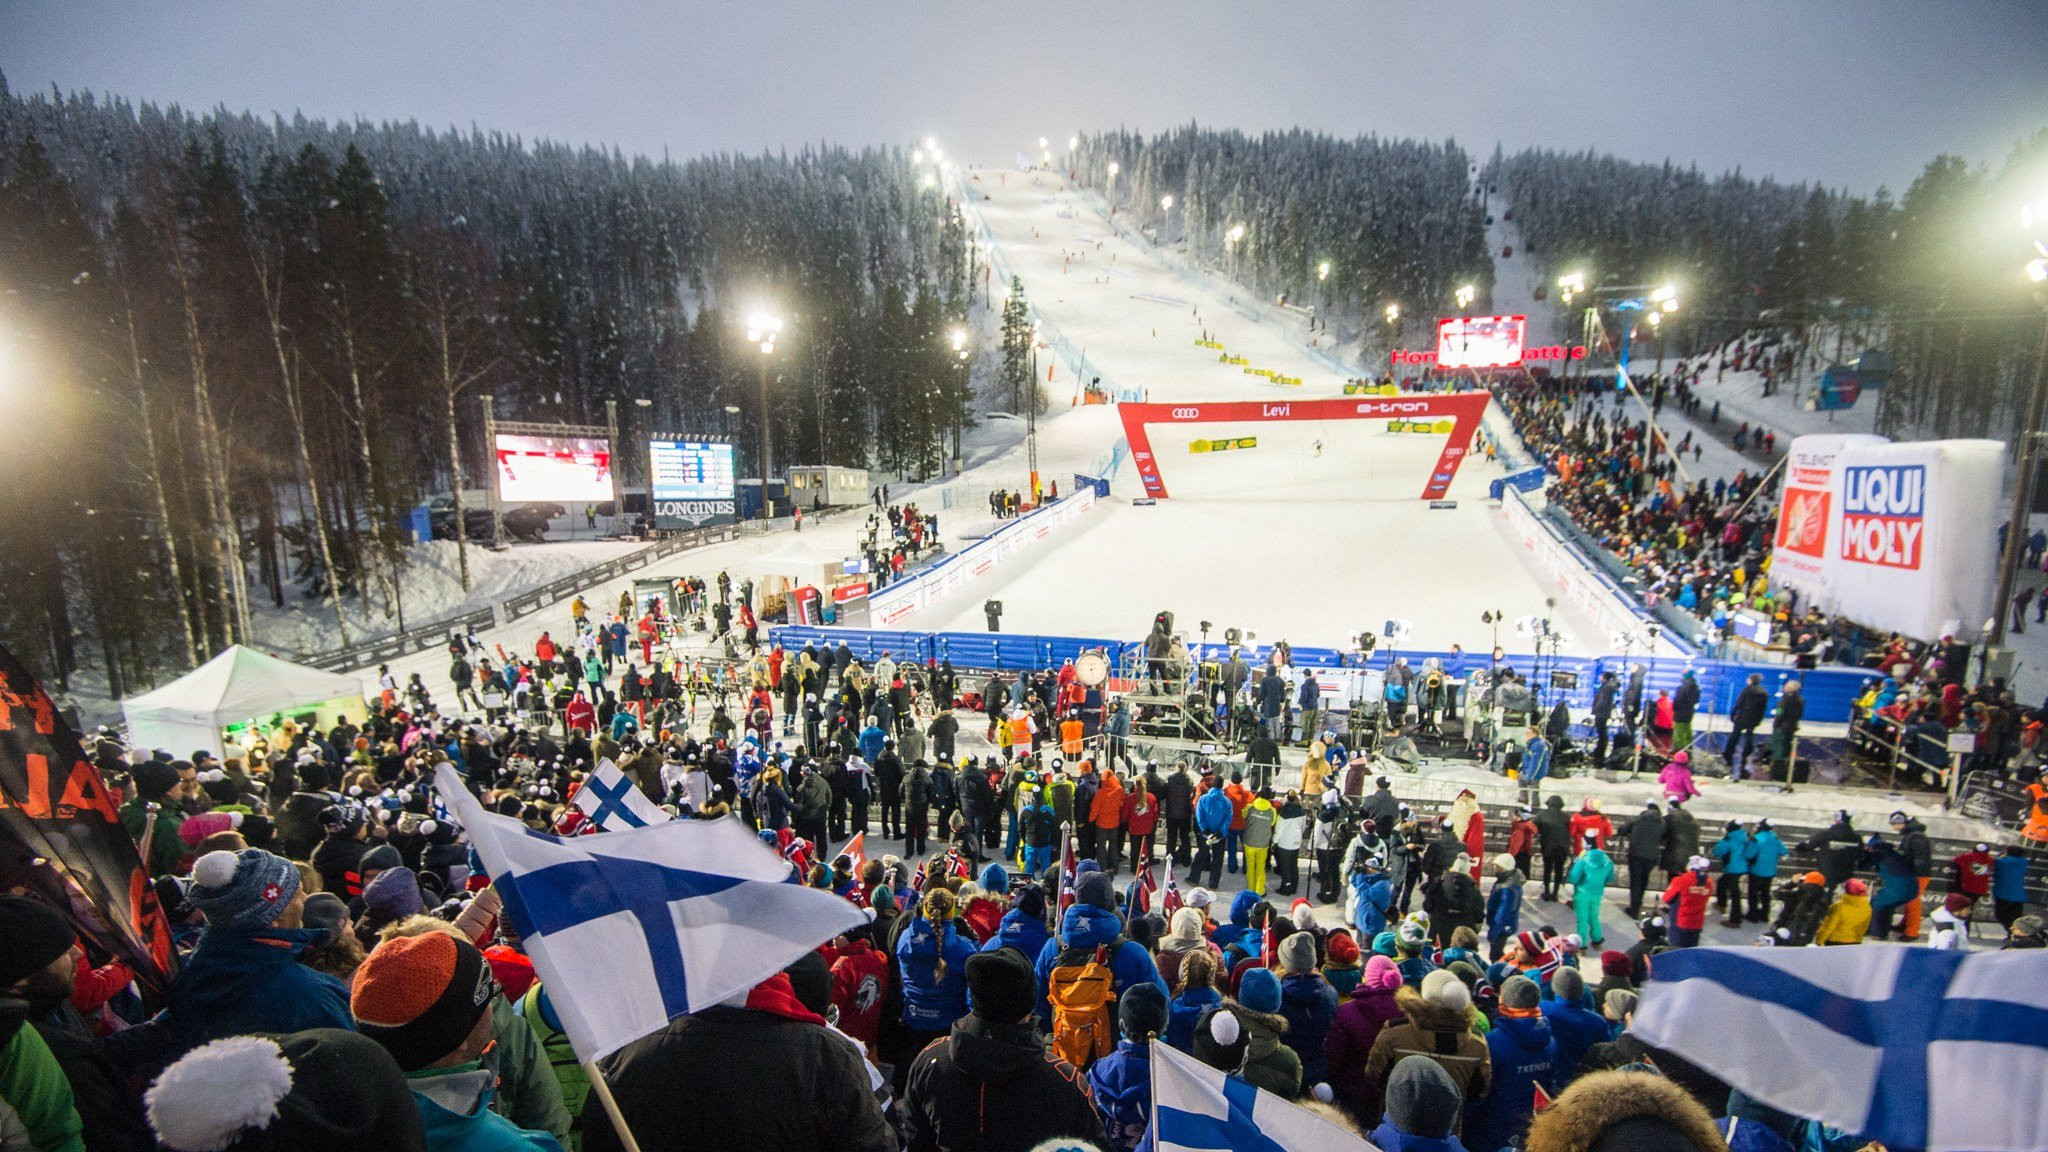 Levi is set to host the second leg of the Women's FIS Alpine Ski World Cup ©Levi Ski Resort